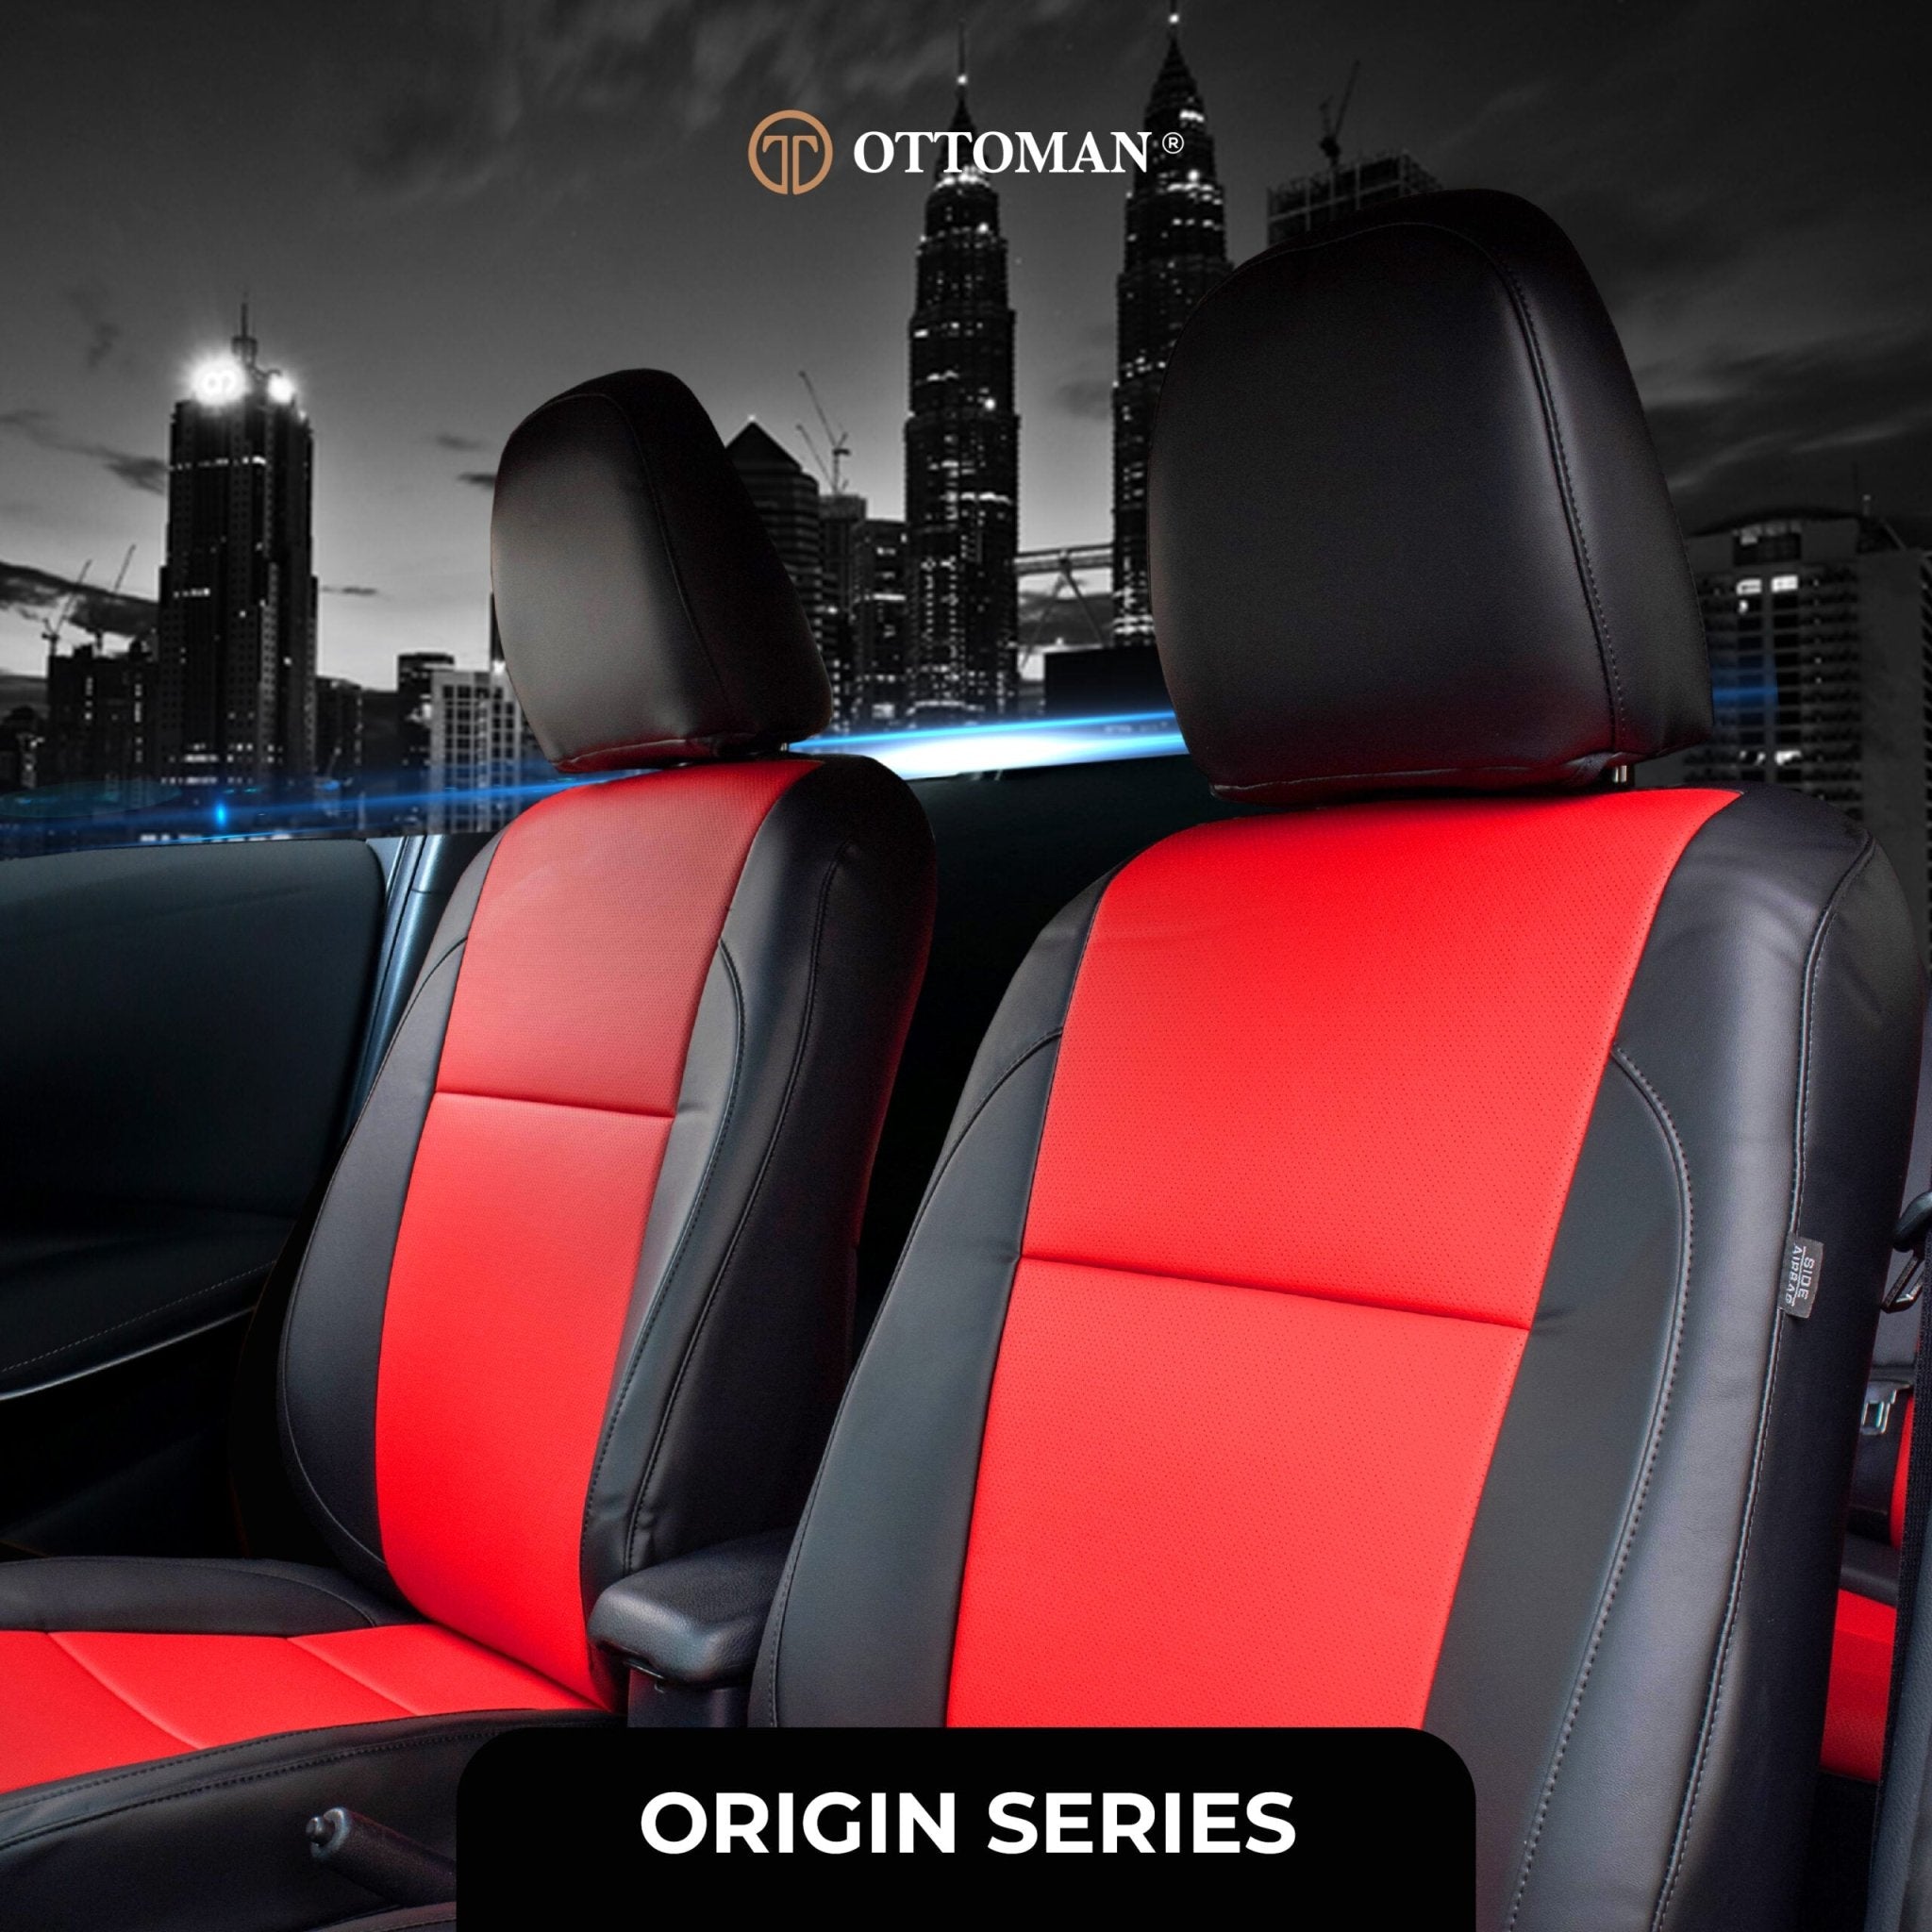 Isuzu D-Max (2021-Present) Ottoman Seat Cover Seat Cover in Klang Selangor, Penang, Johor Bahru - Ottoman Car Mats